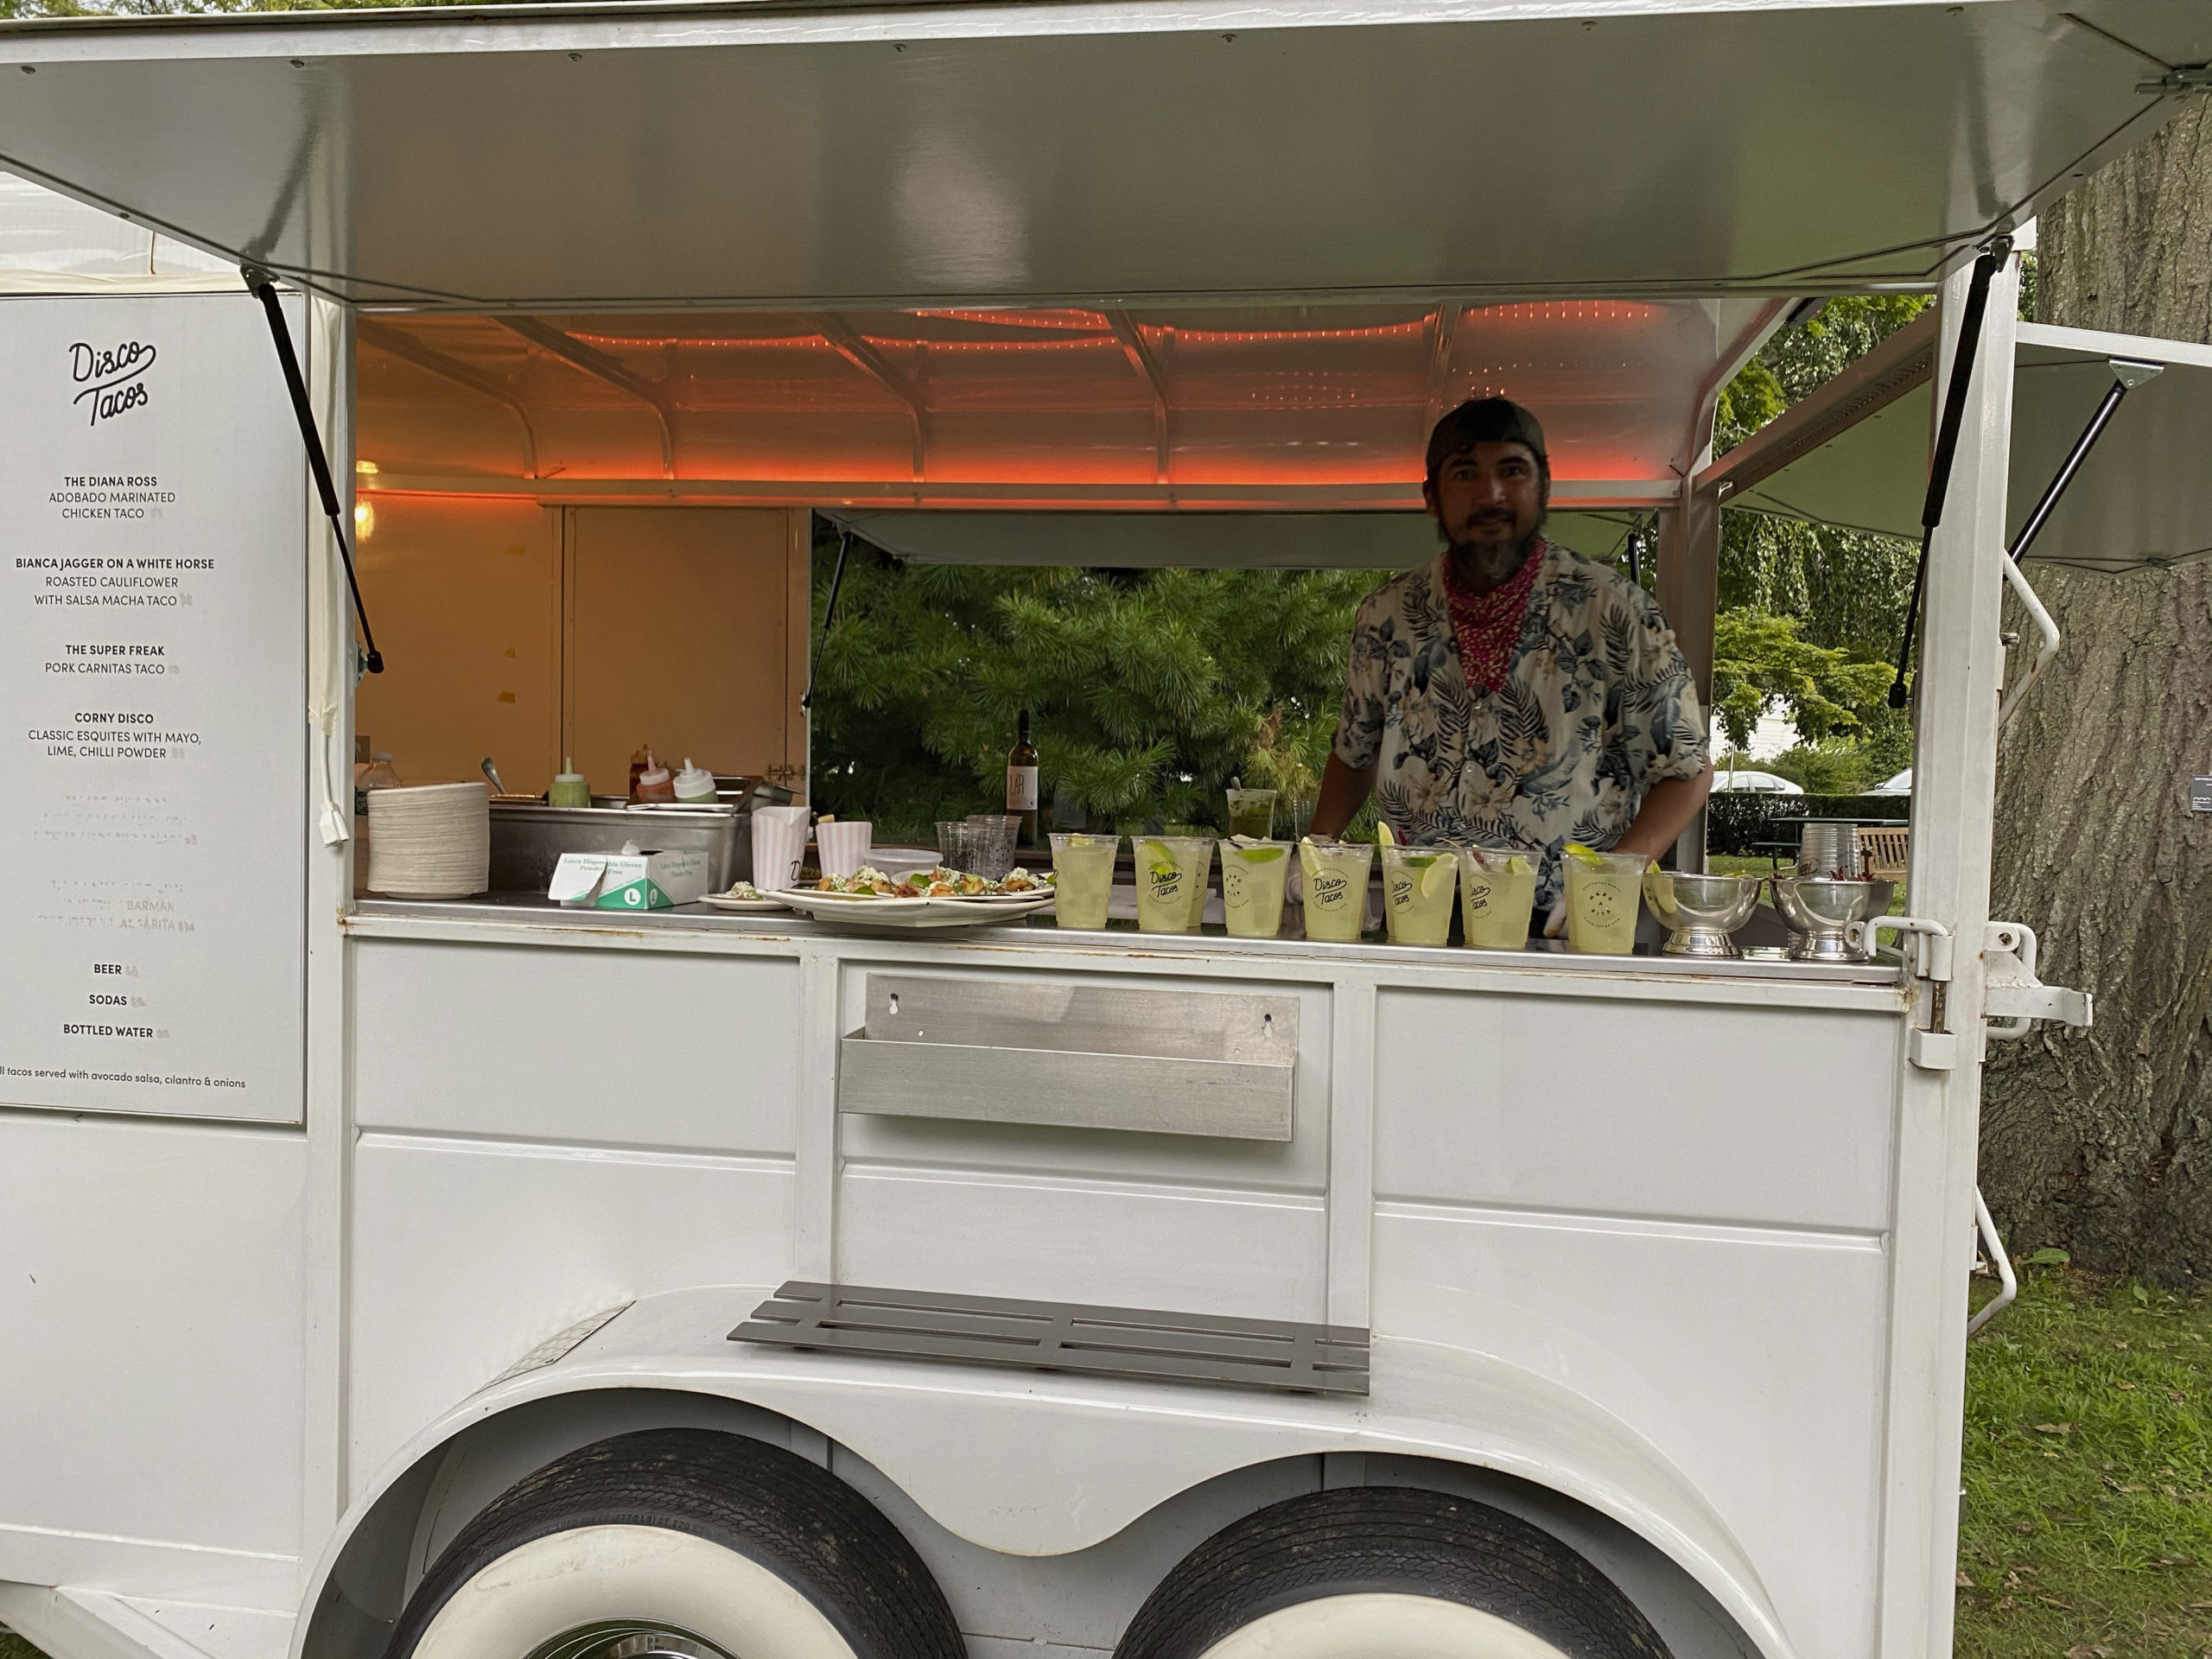 The Disco Taco Food Truck with chef Fabrizio Duque.